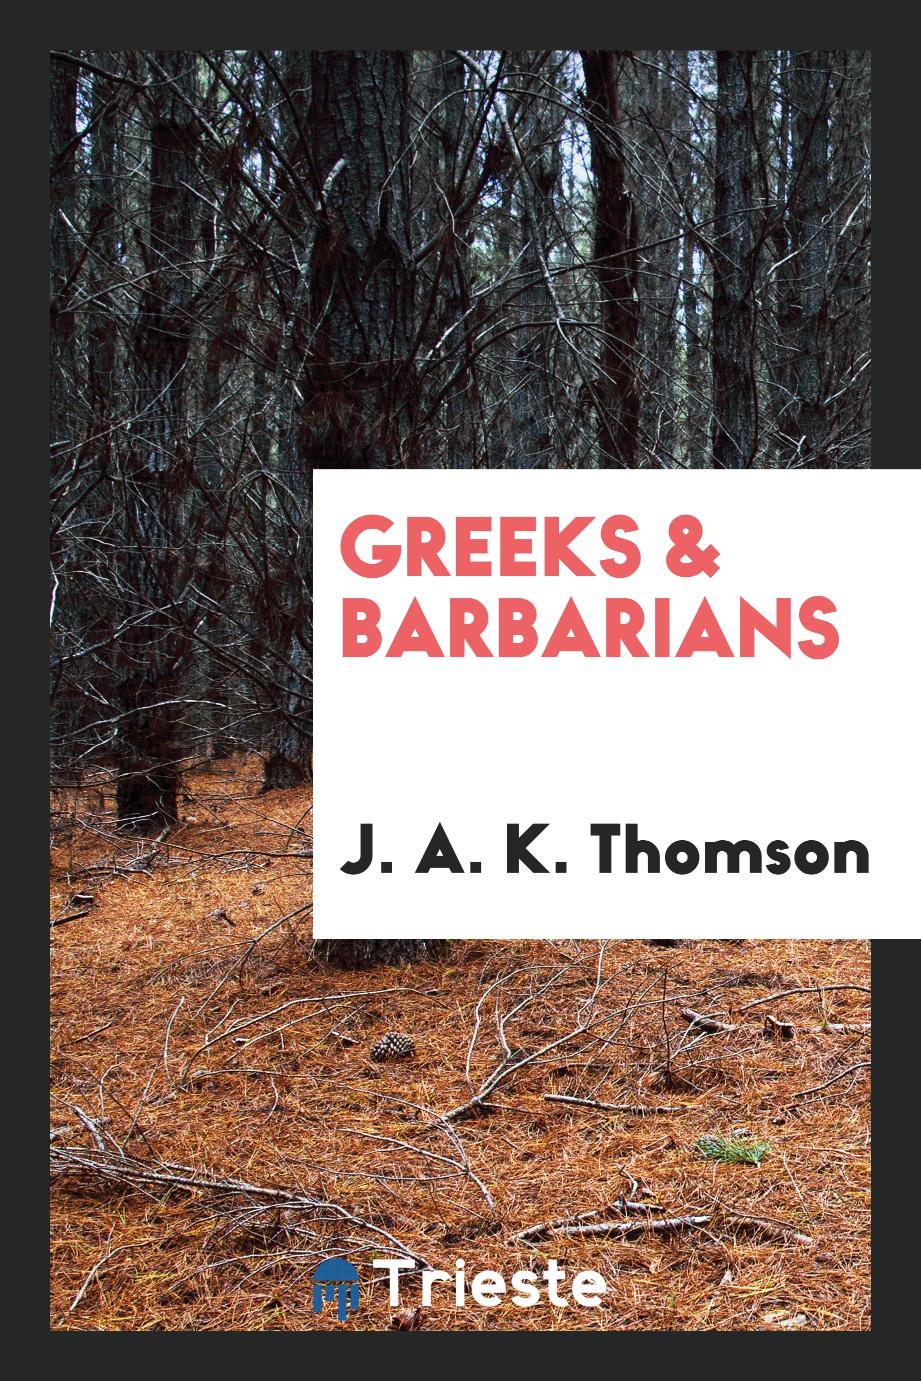 Greeks & barbarians